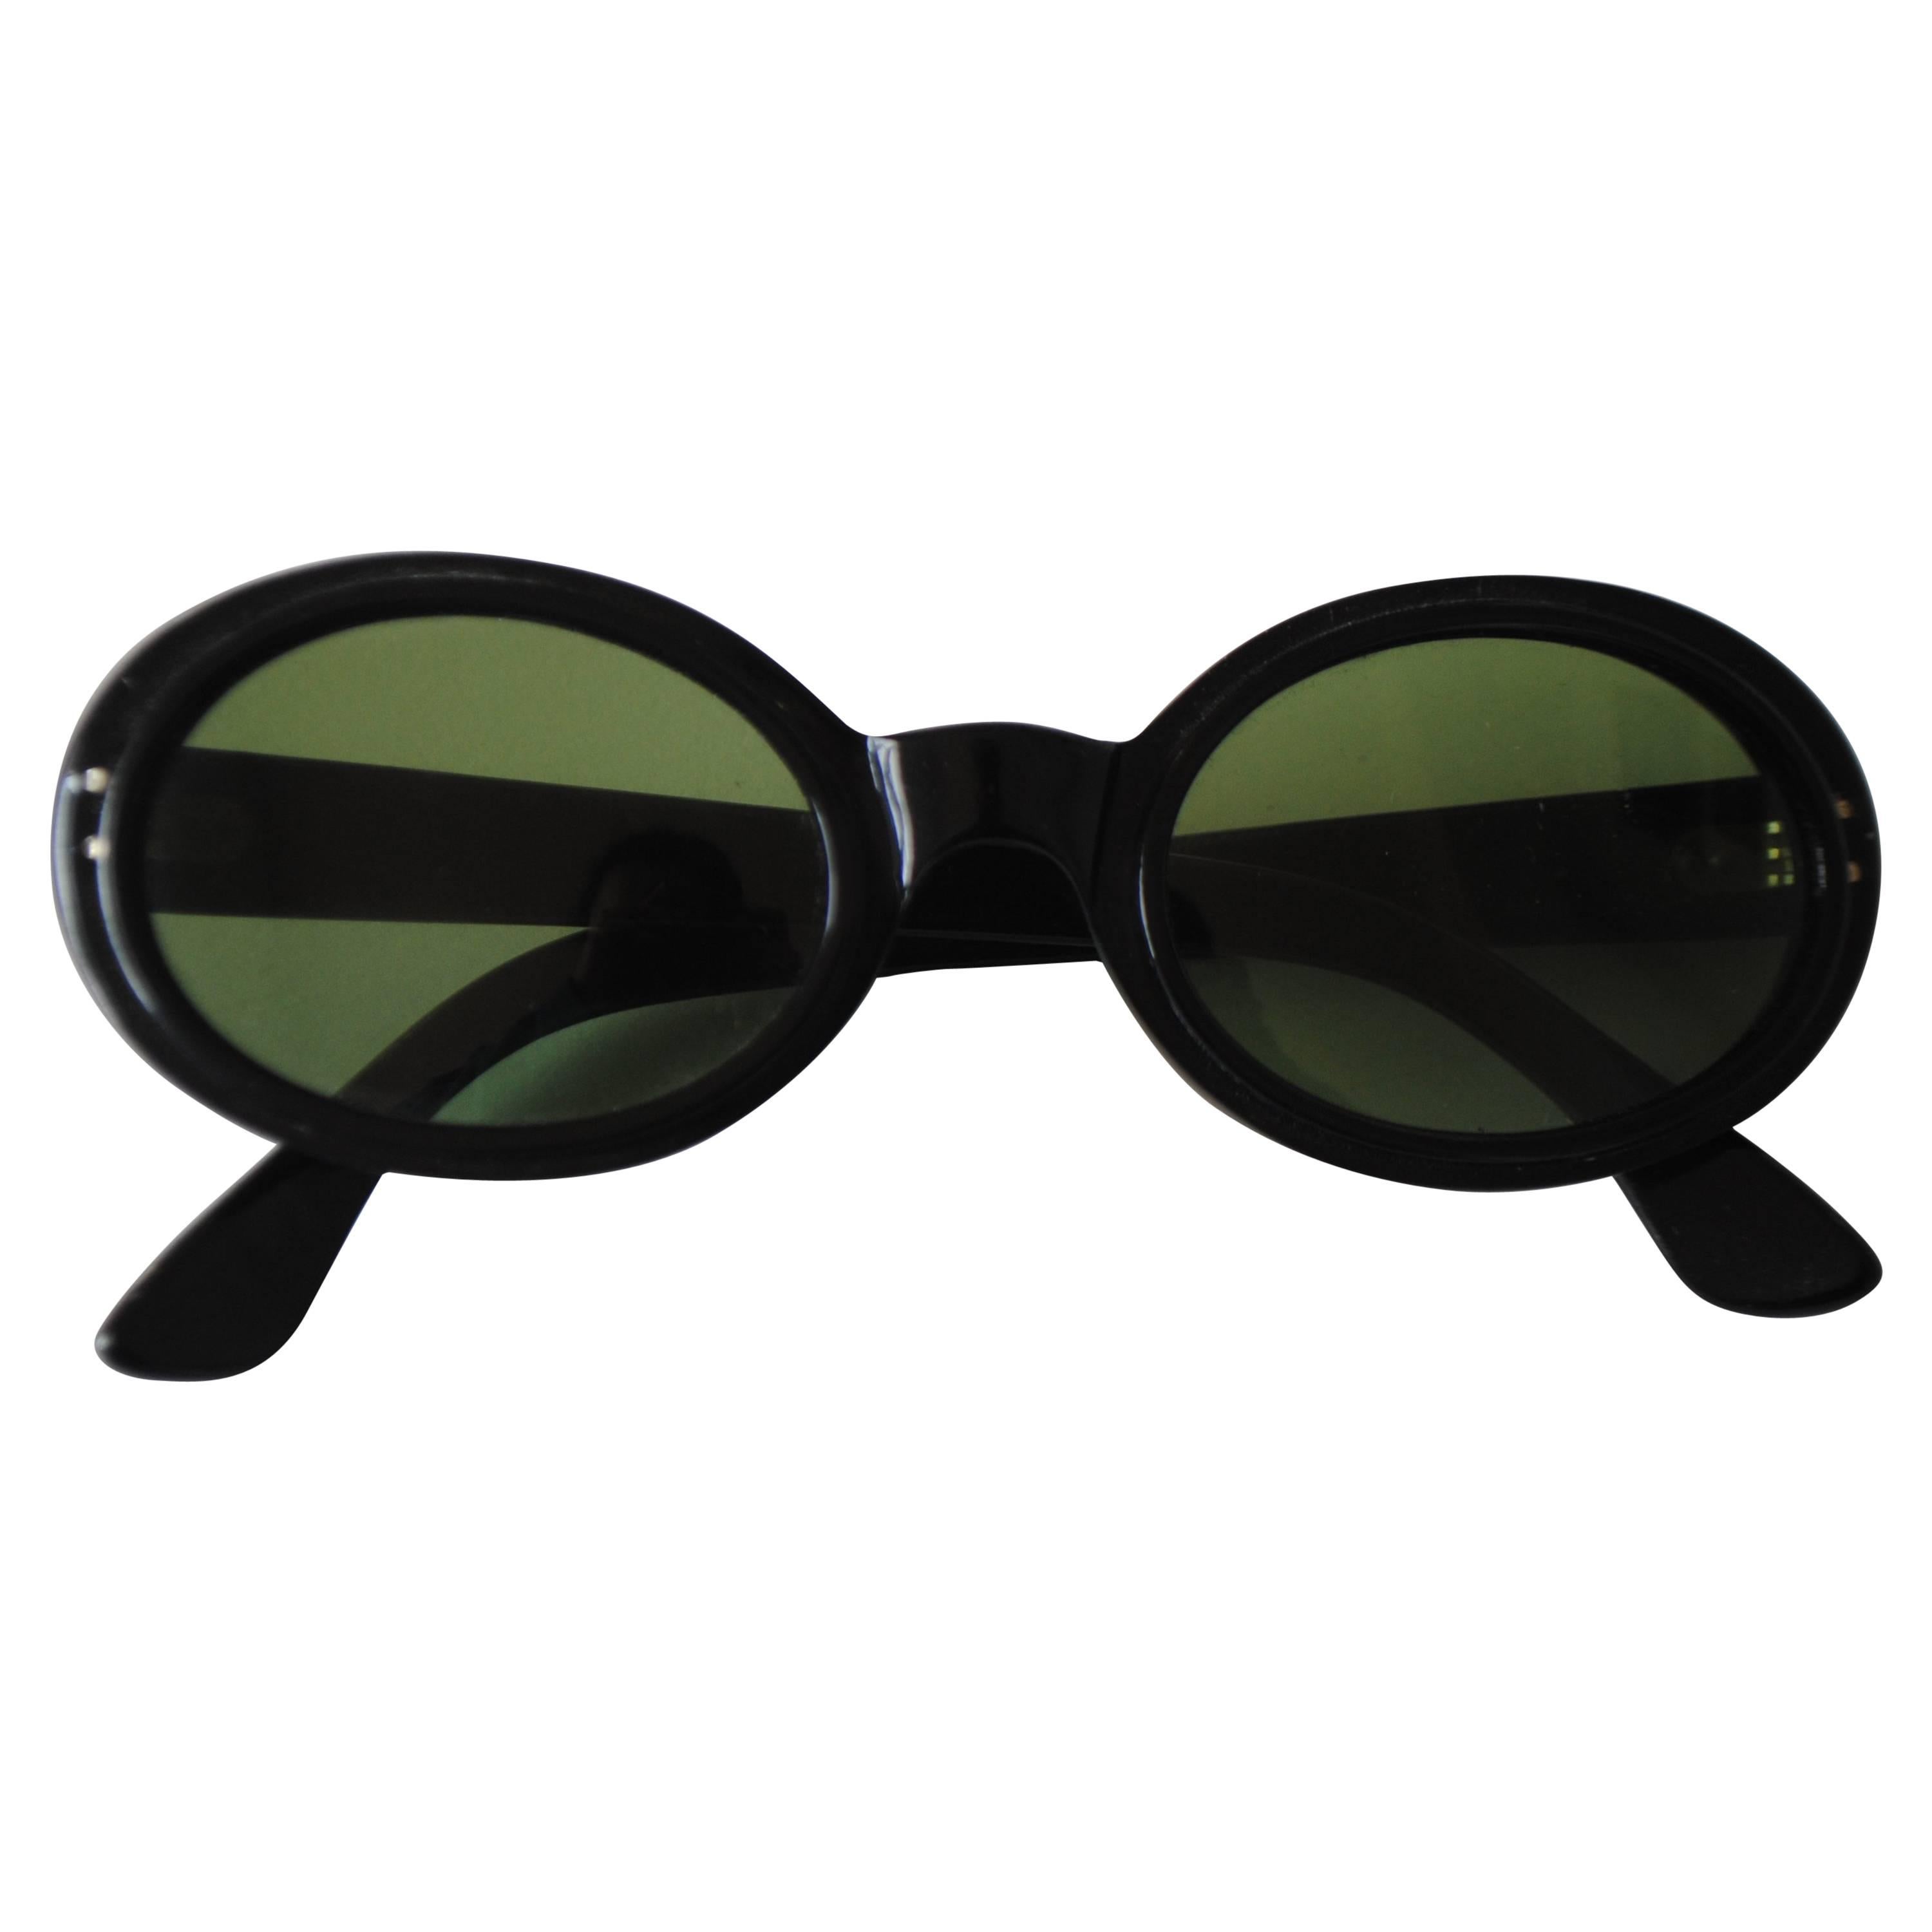 Club Black green sunglasses